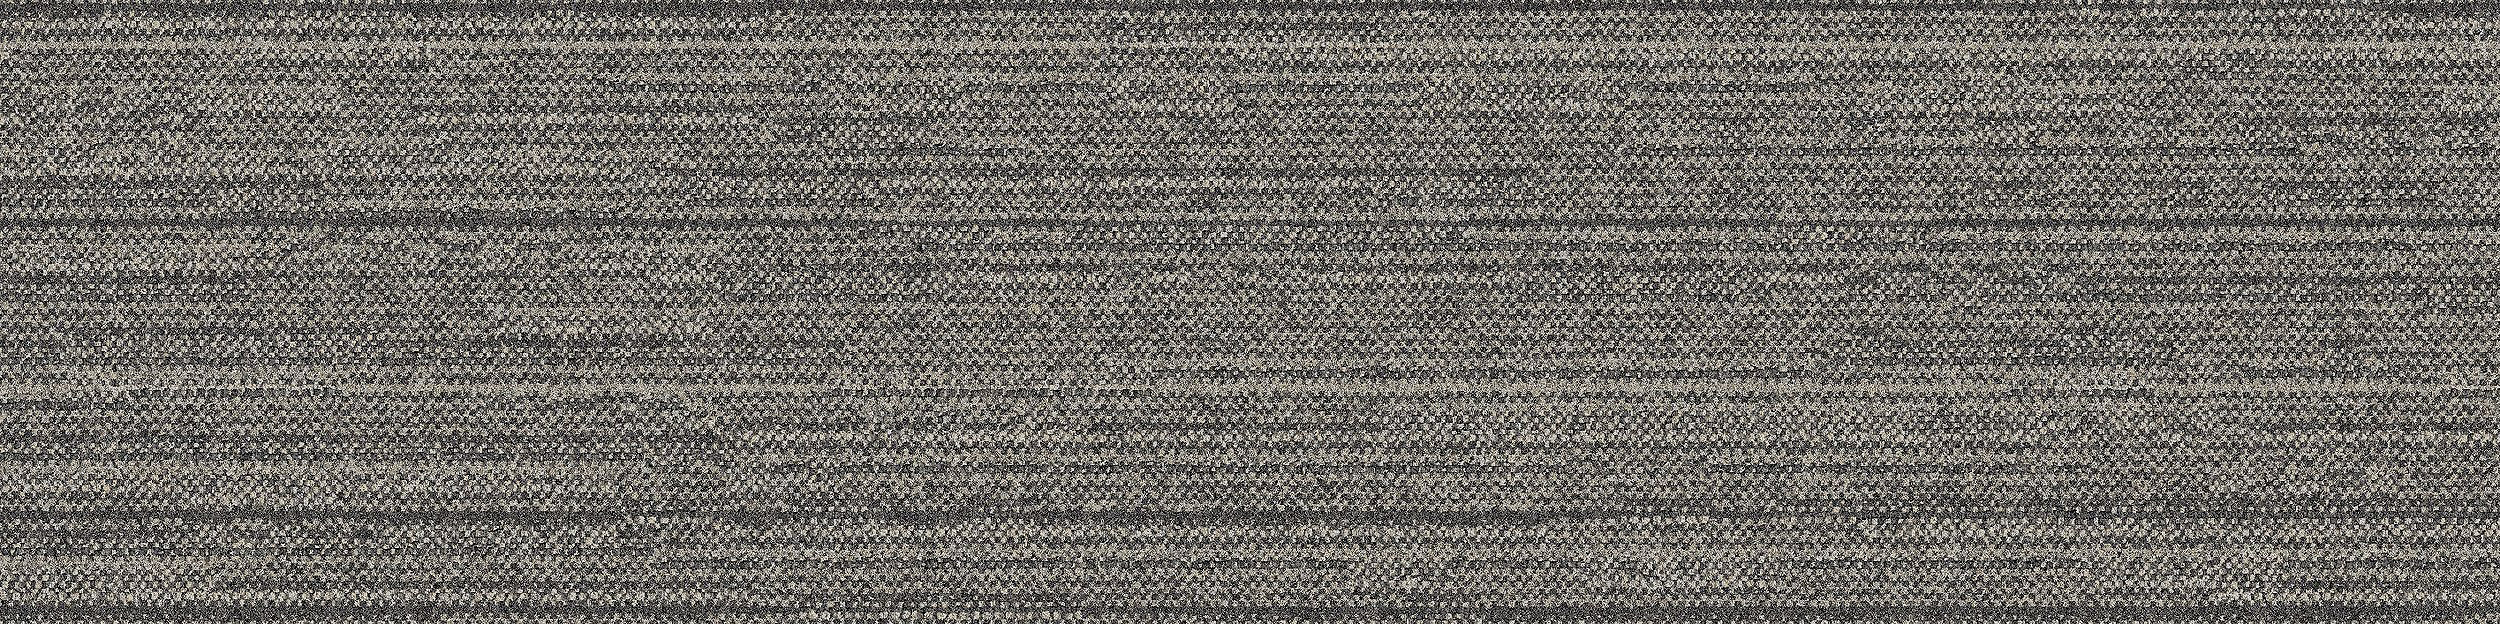 WW880 Carpet Tile In Natural Loom afbeeldingnummer 8